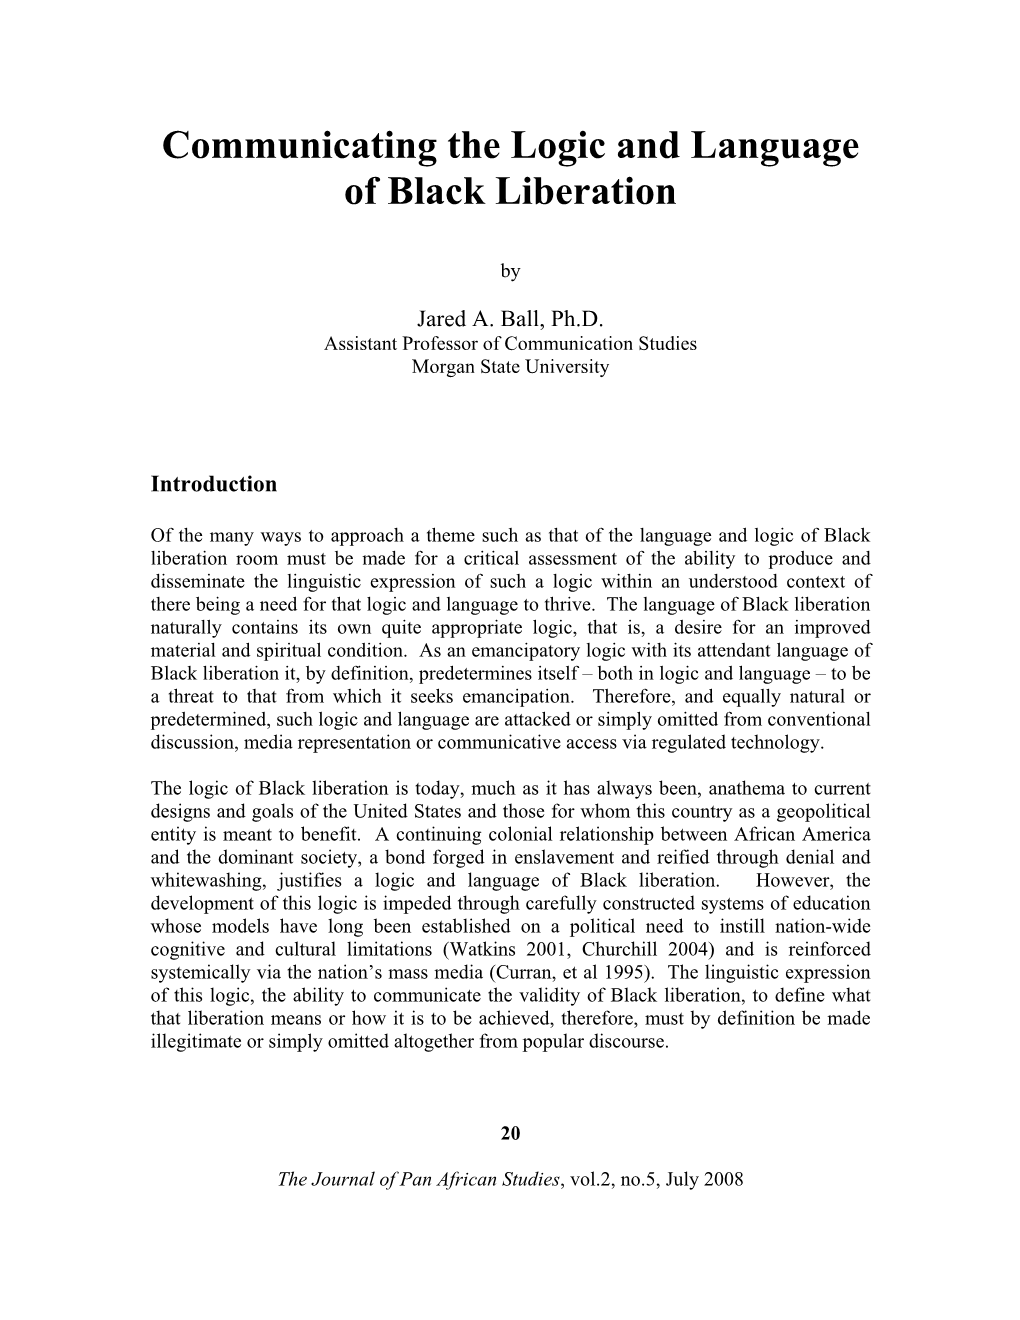 Communicating the Logic and Language of Black Liberation